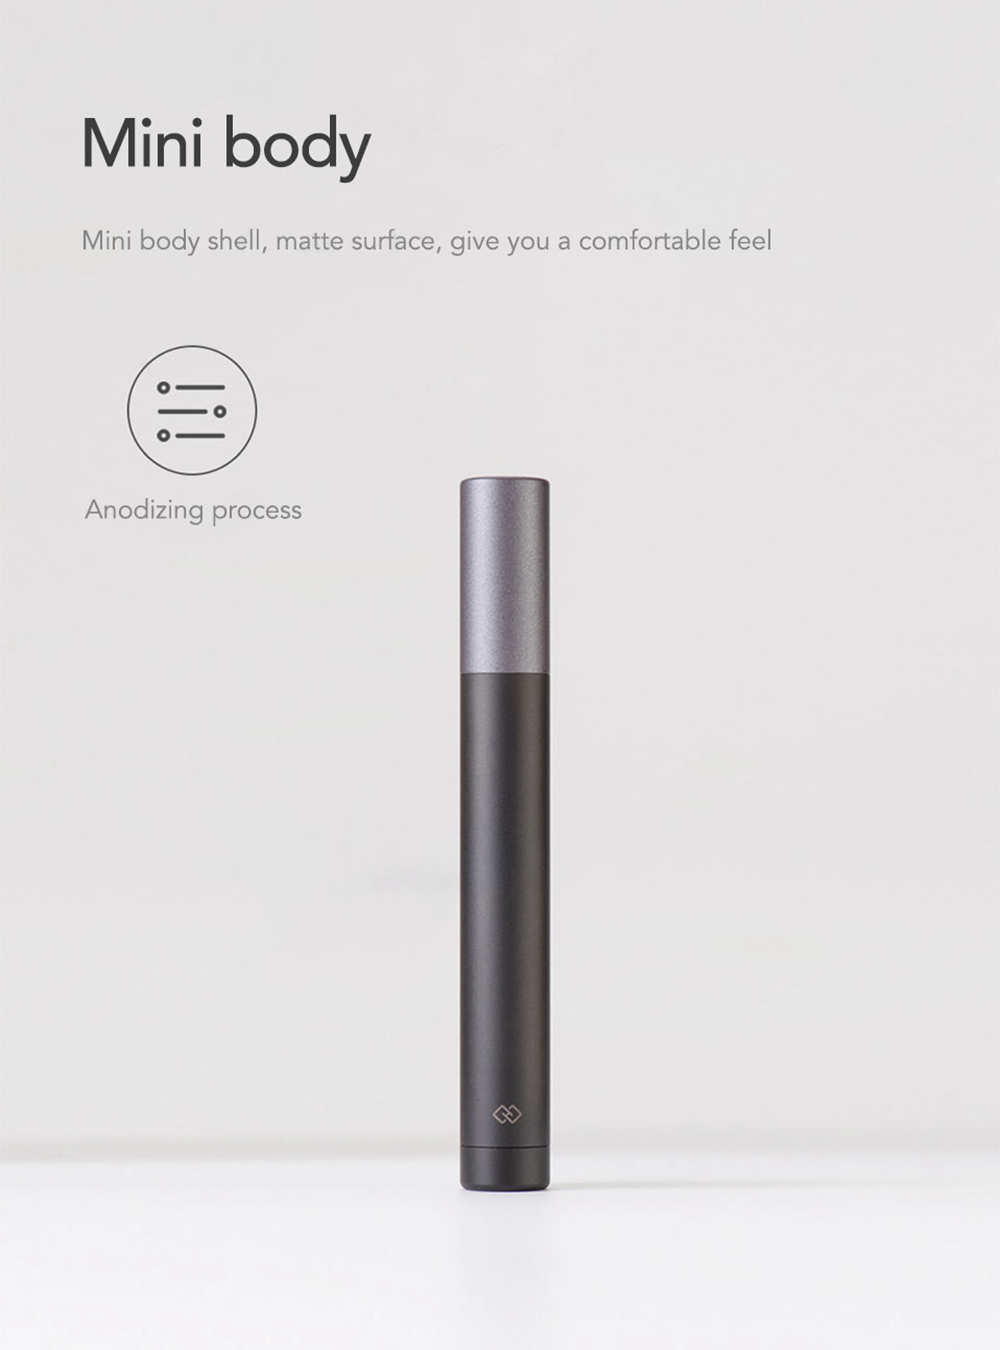 Xiaomi HN1 Mini Electric Nose Hair Trimmer High Speed Motor Sharp Cutter Head Water Resistant - Black